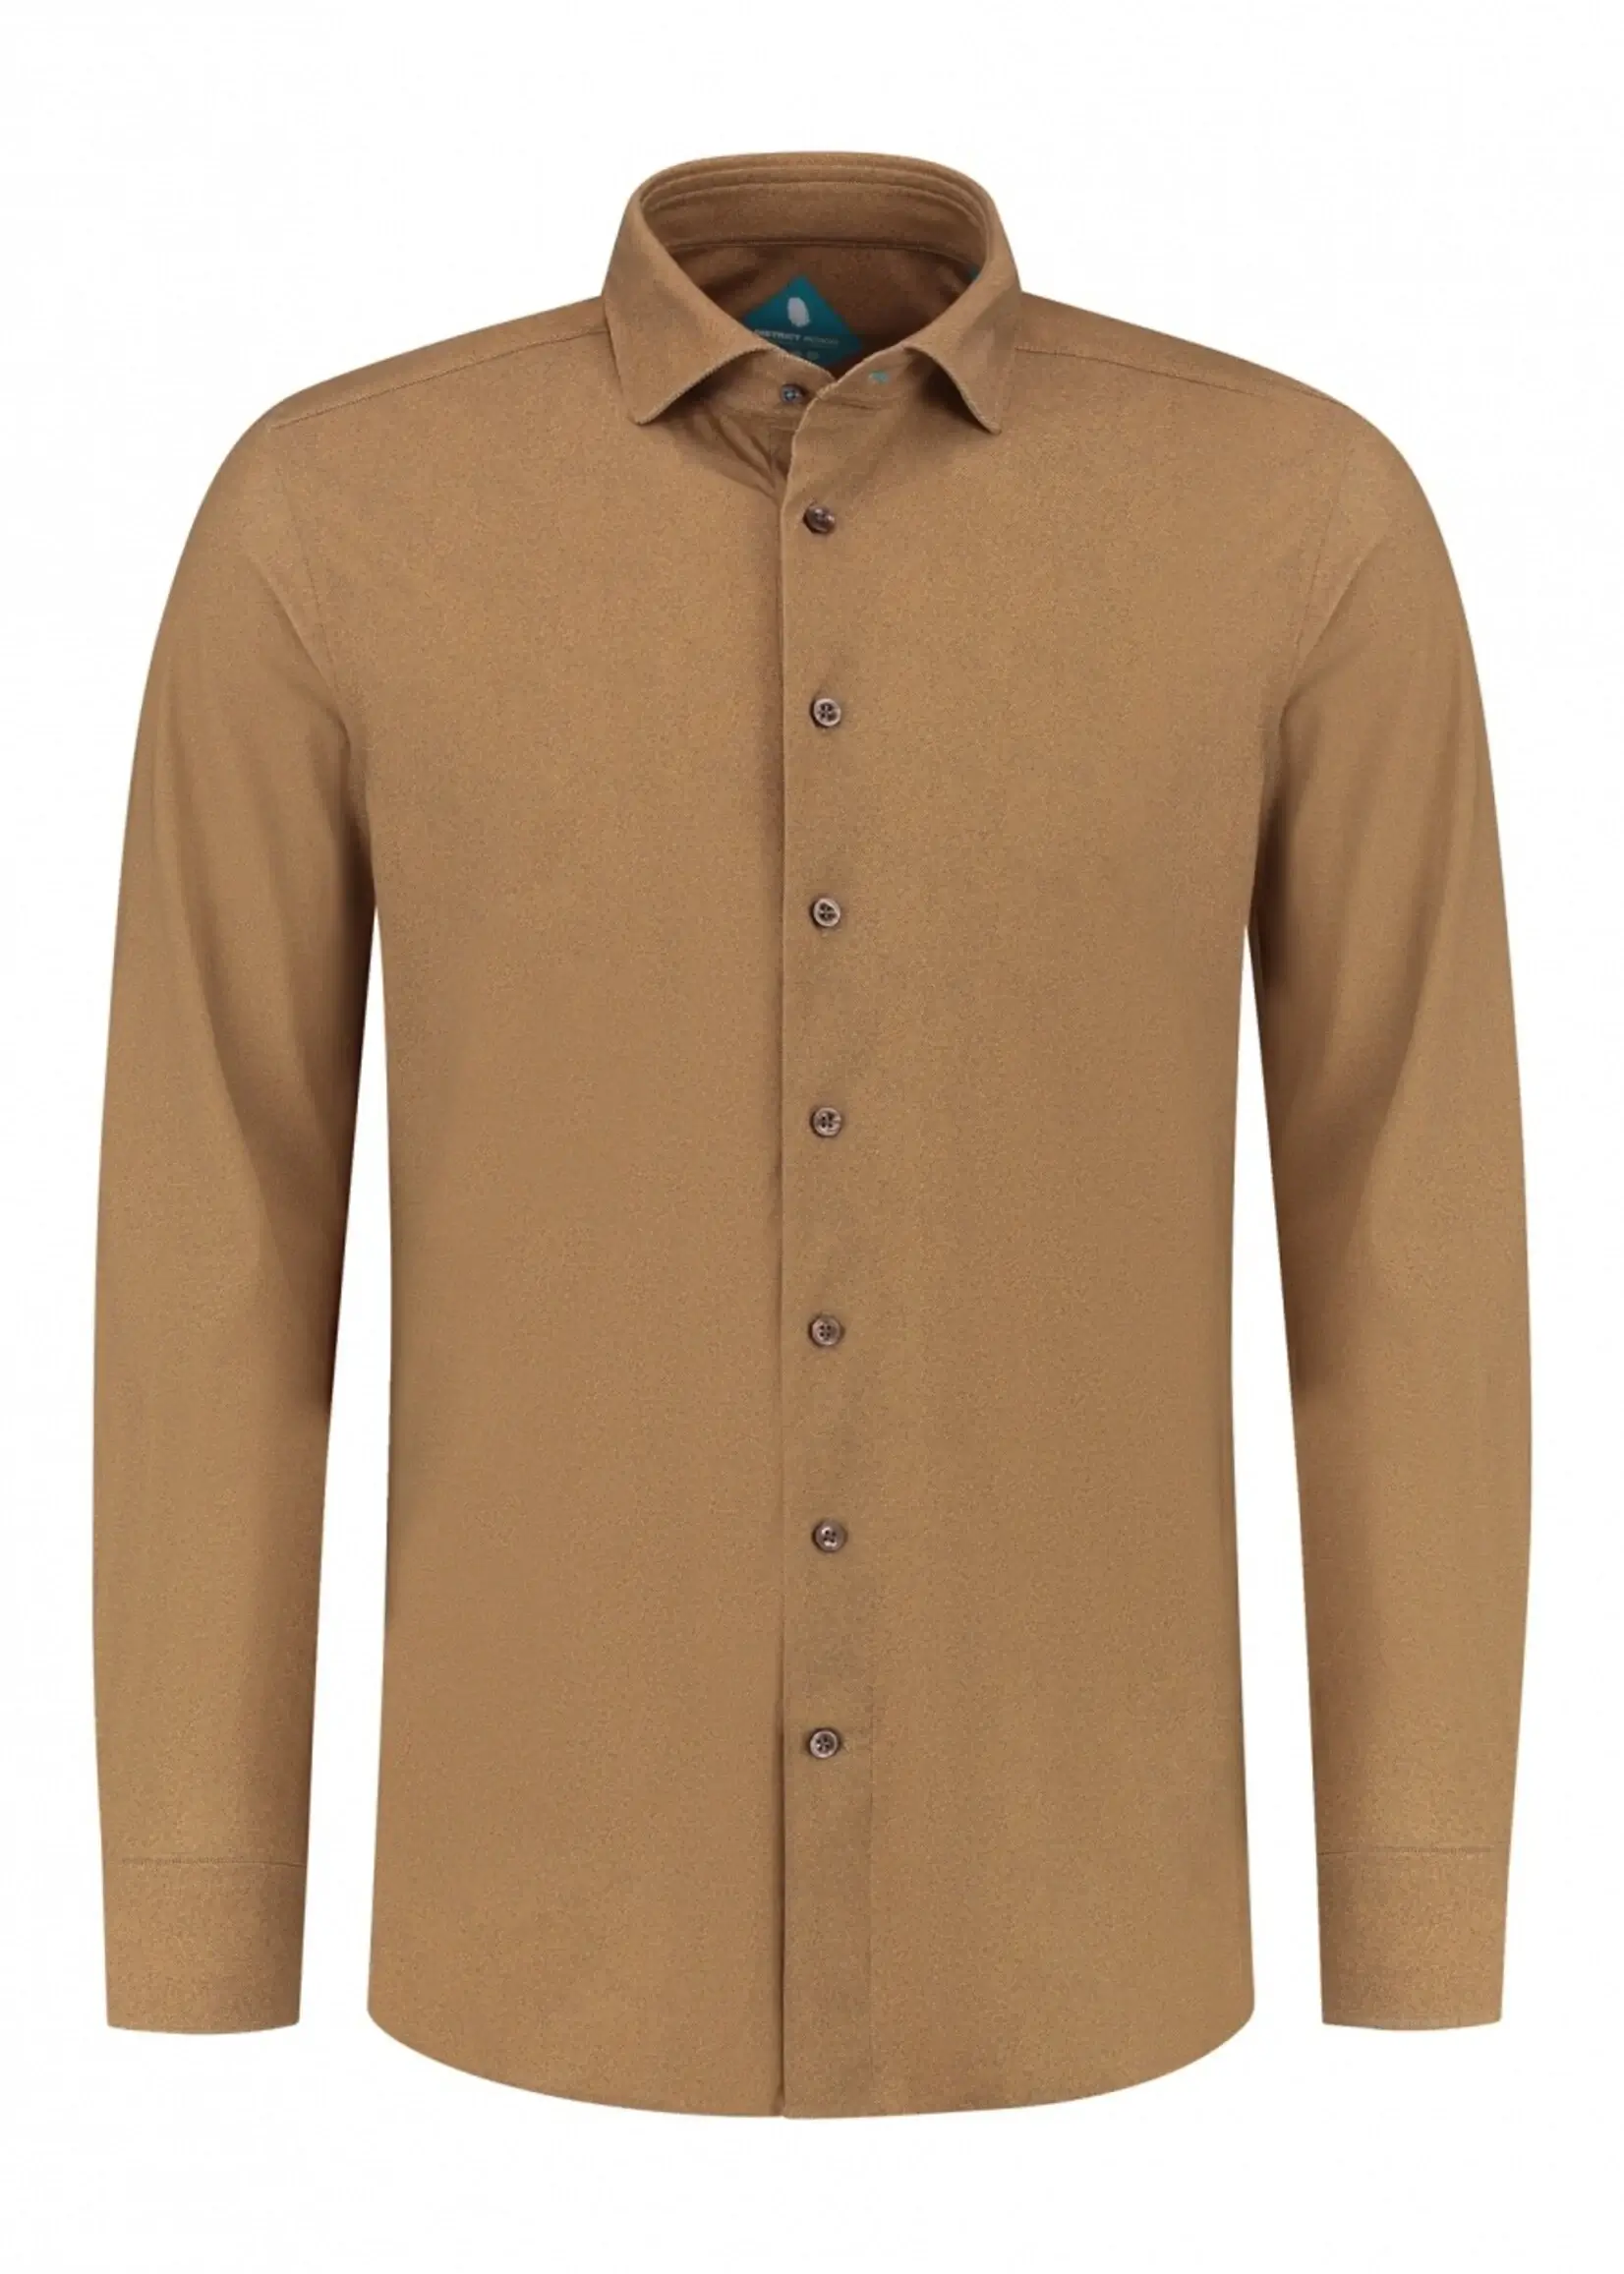 district-indigo-performance-shirt-twill-brown (1)